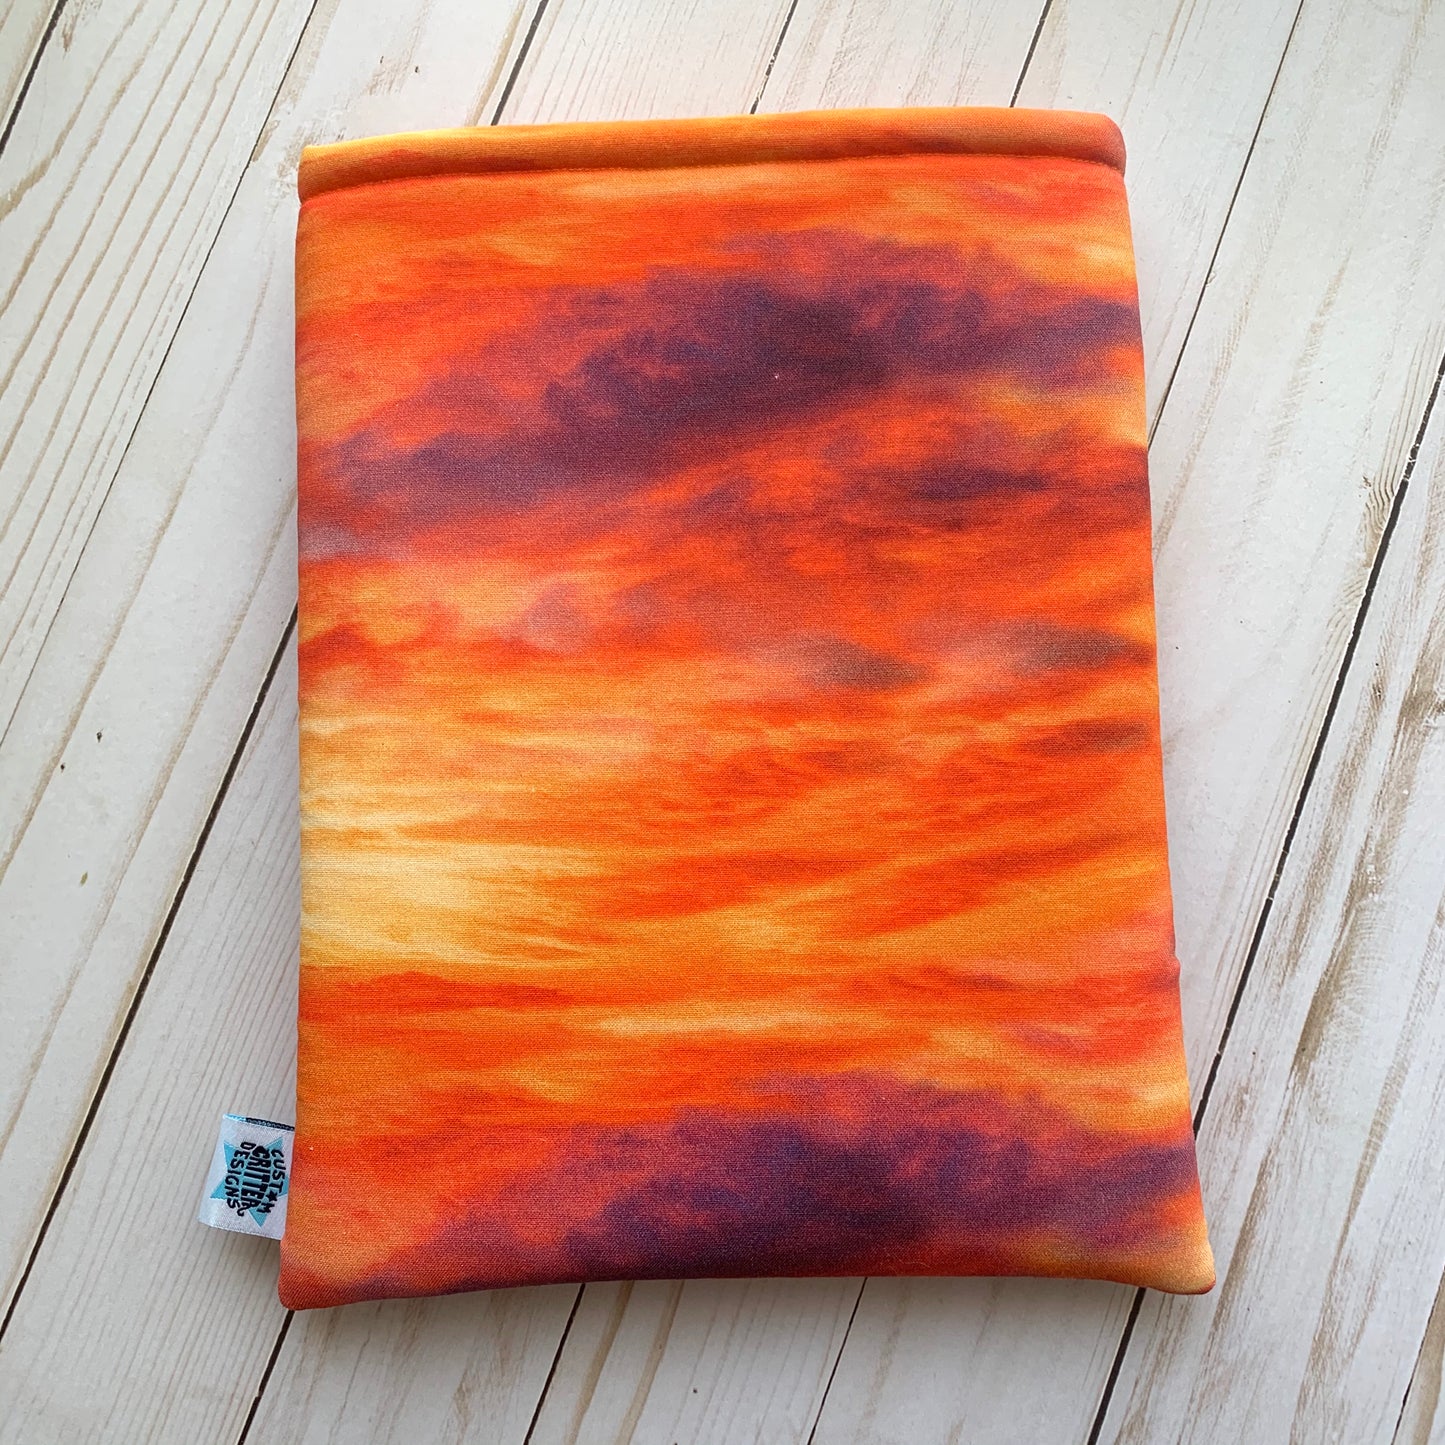 Sunset Sky - Book Sleeve